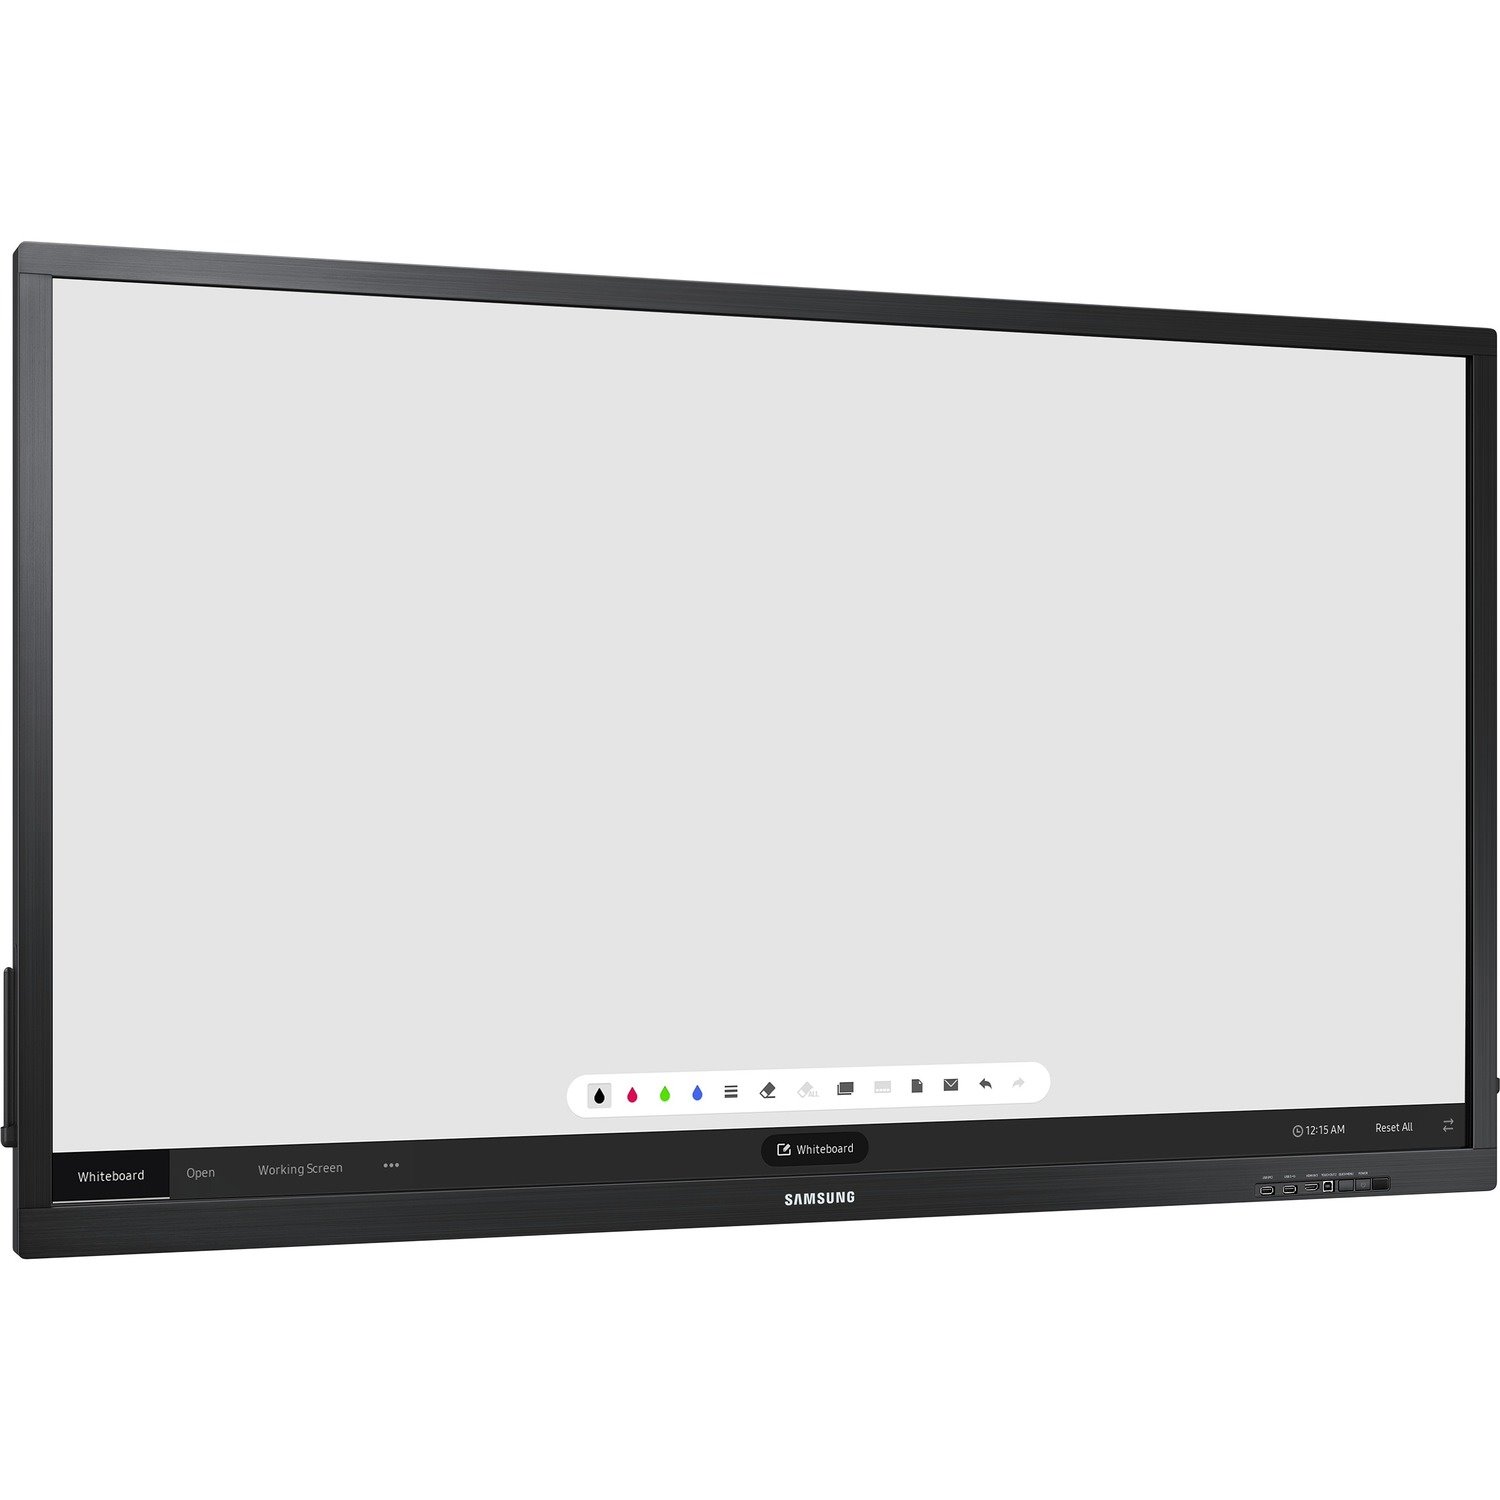 Samsung Interactive QB75N-W 75" LCD Digital Signage Display